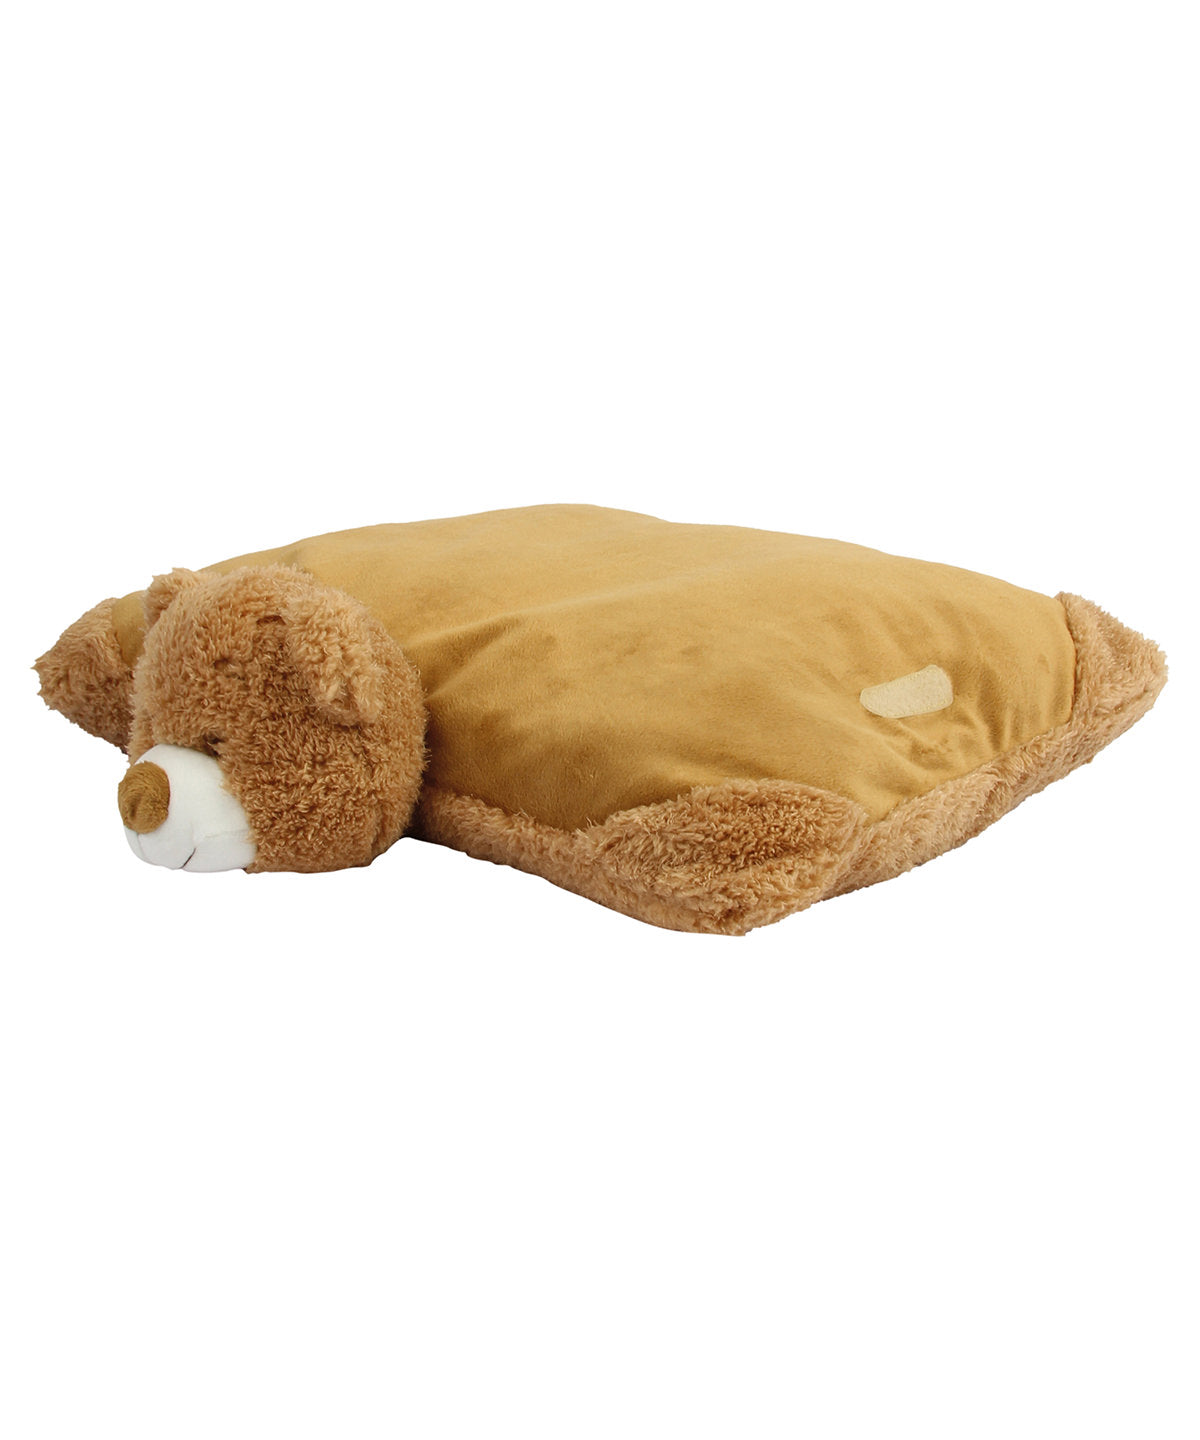 Bear Cushion